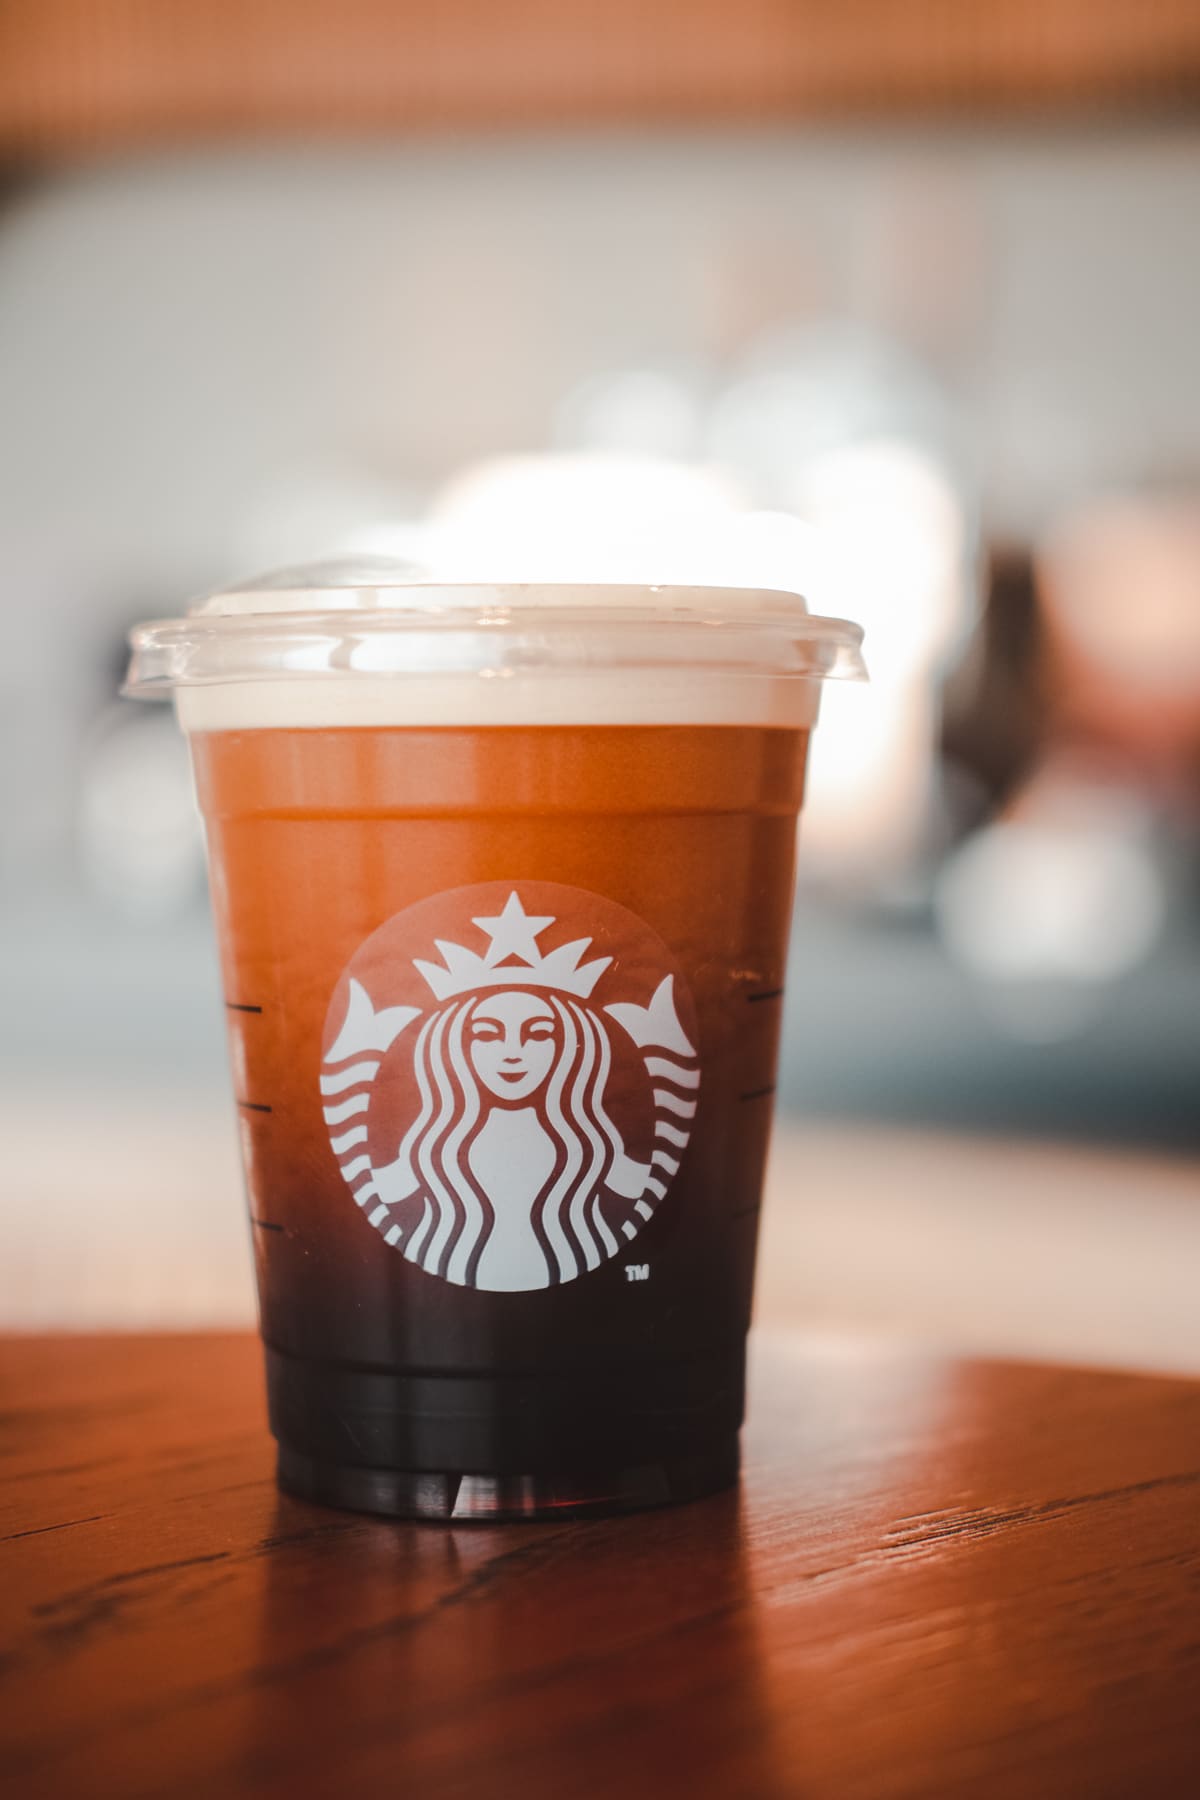 Starbucks Nitro Cold Brew Coffee in the Starbucks take away plastic cup with white logo.